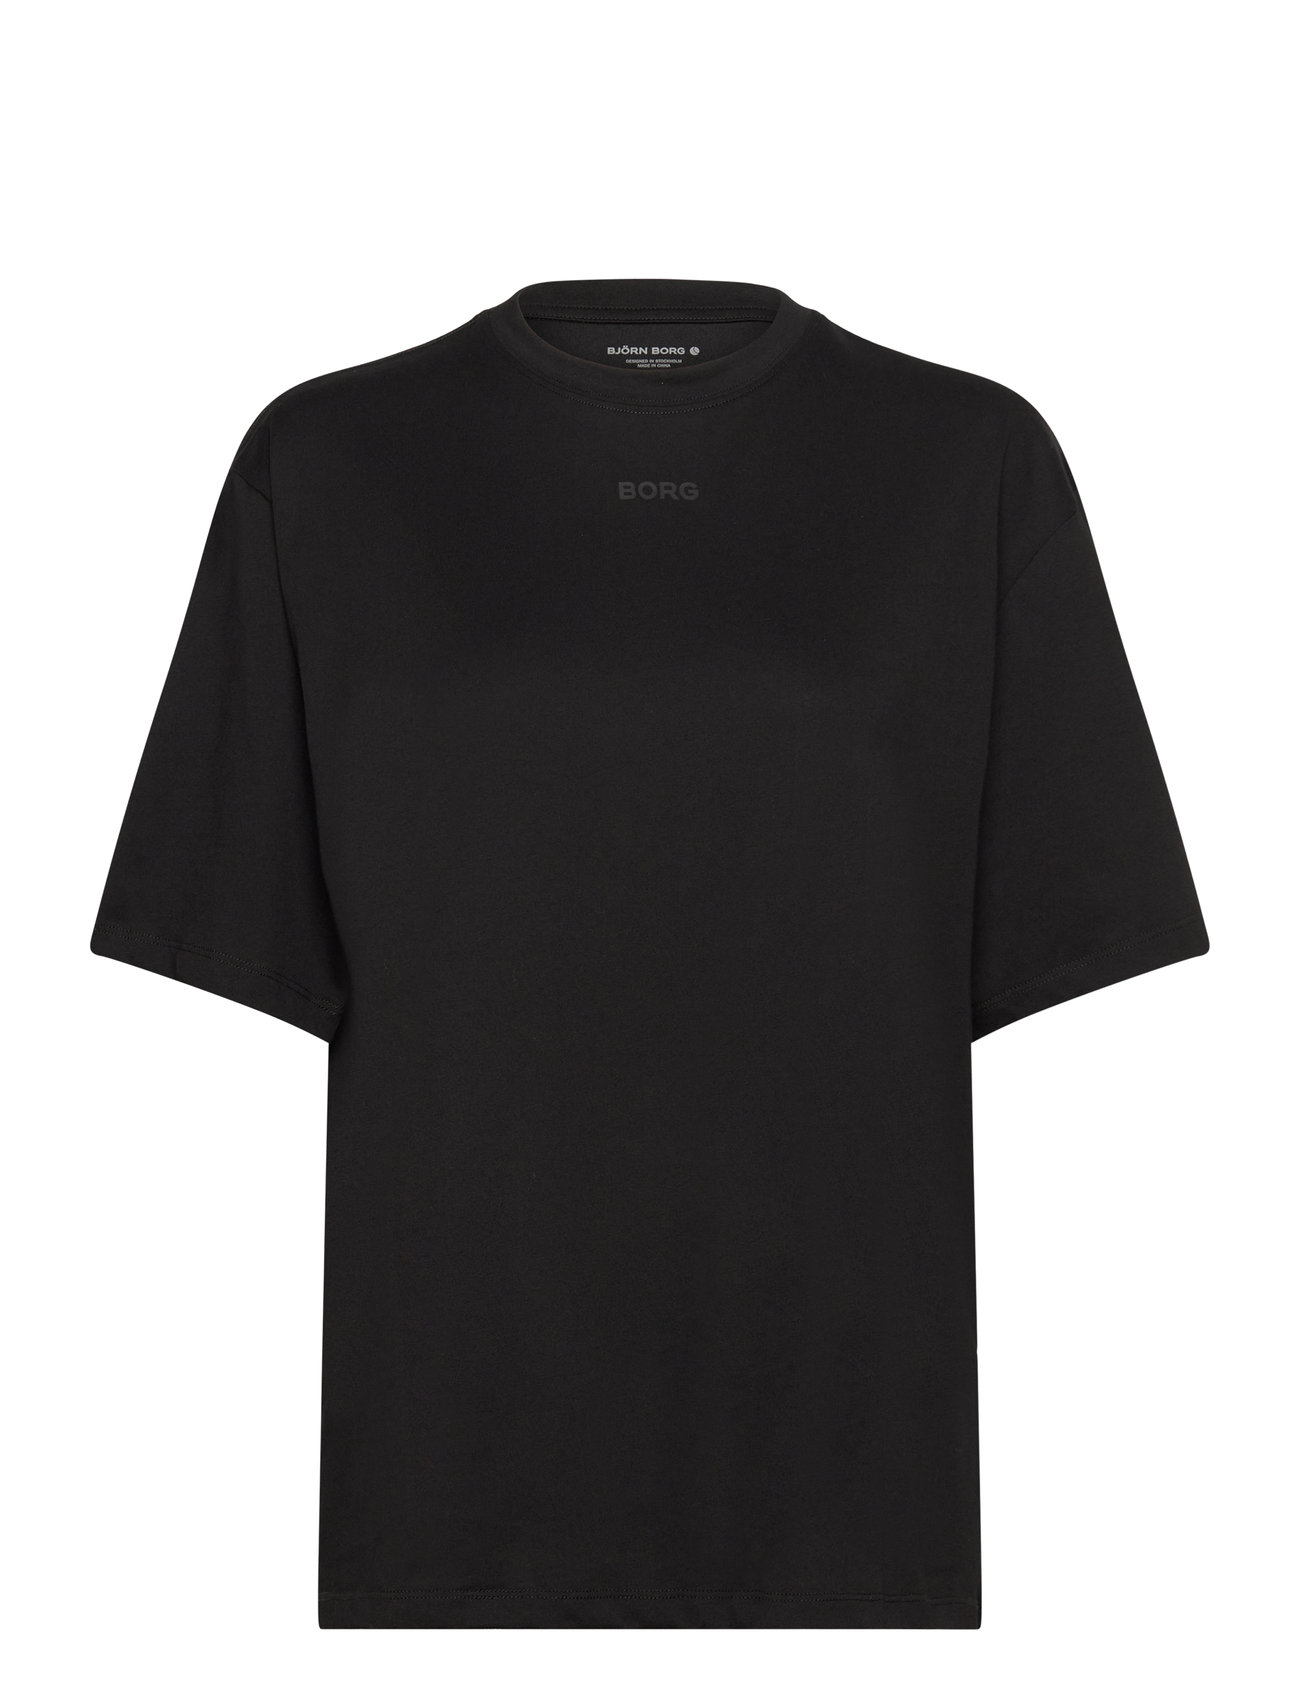 Studio Over D T-Shirt Tops T-shirts & Tops Short-sleeved Black Björn Borg